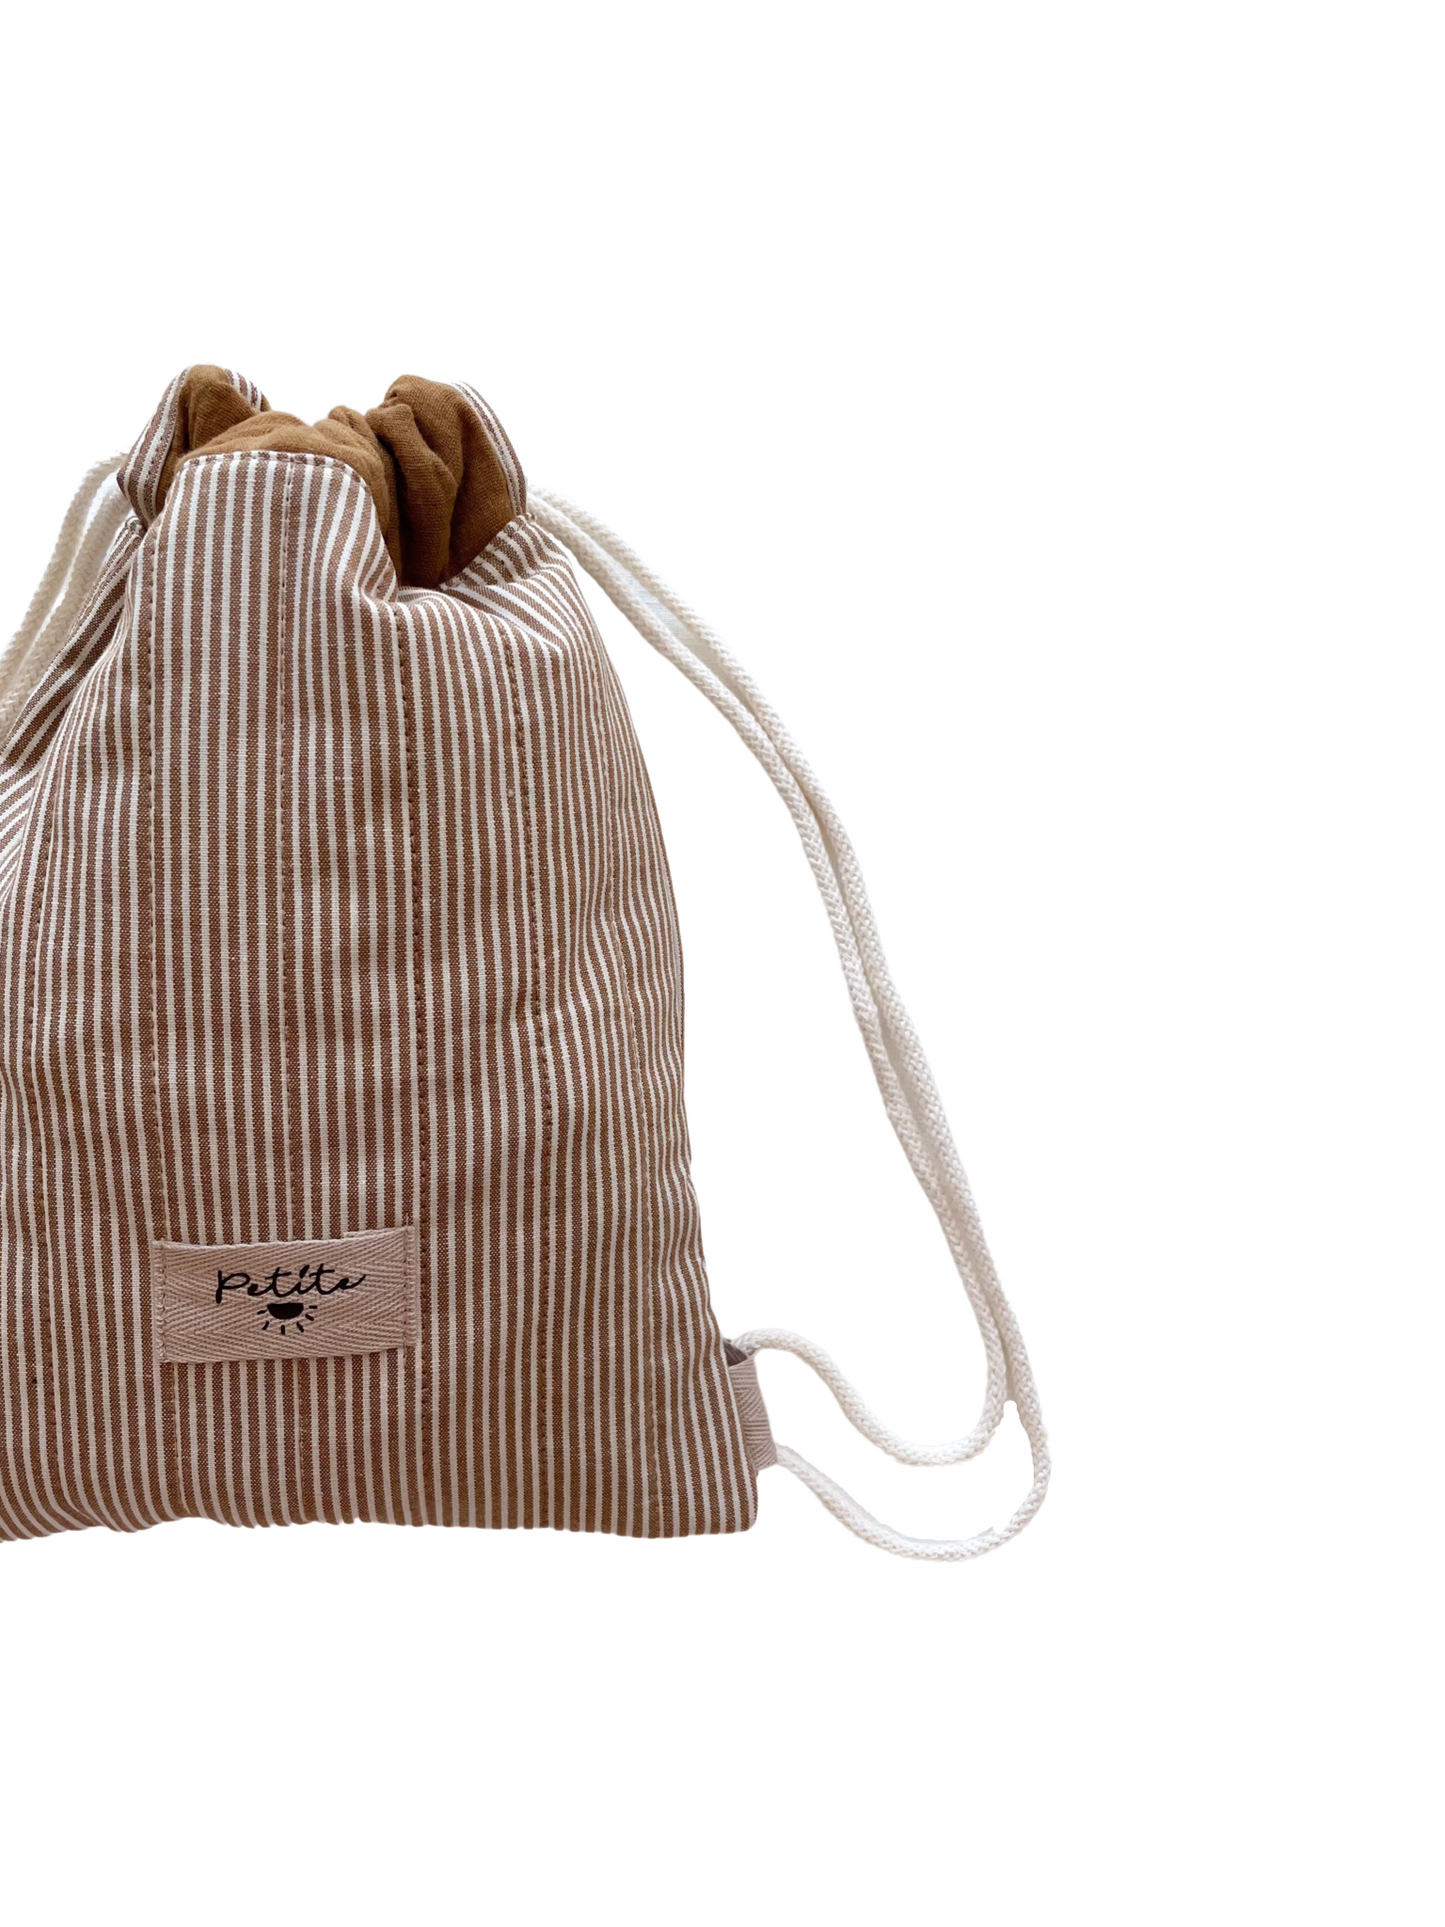 Cotton drawstring backpack / stripes - caramel